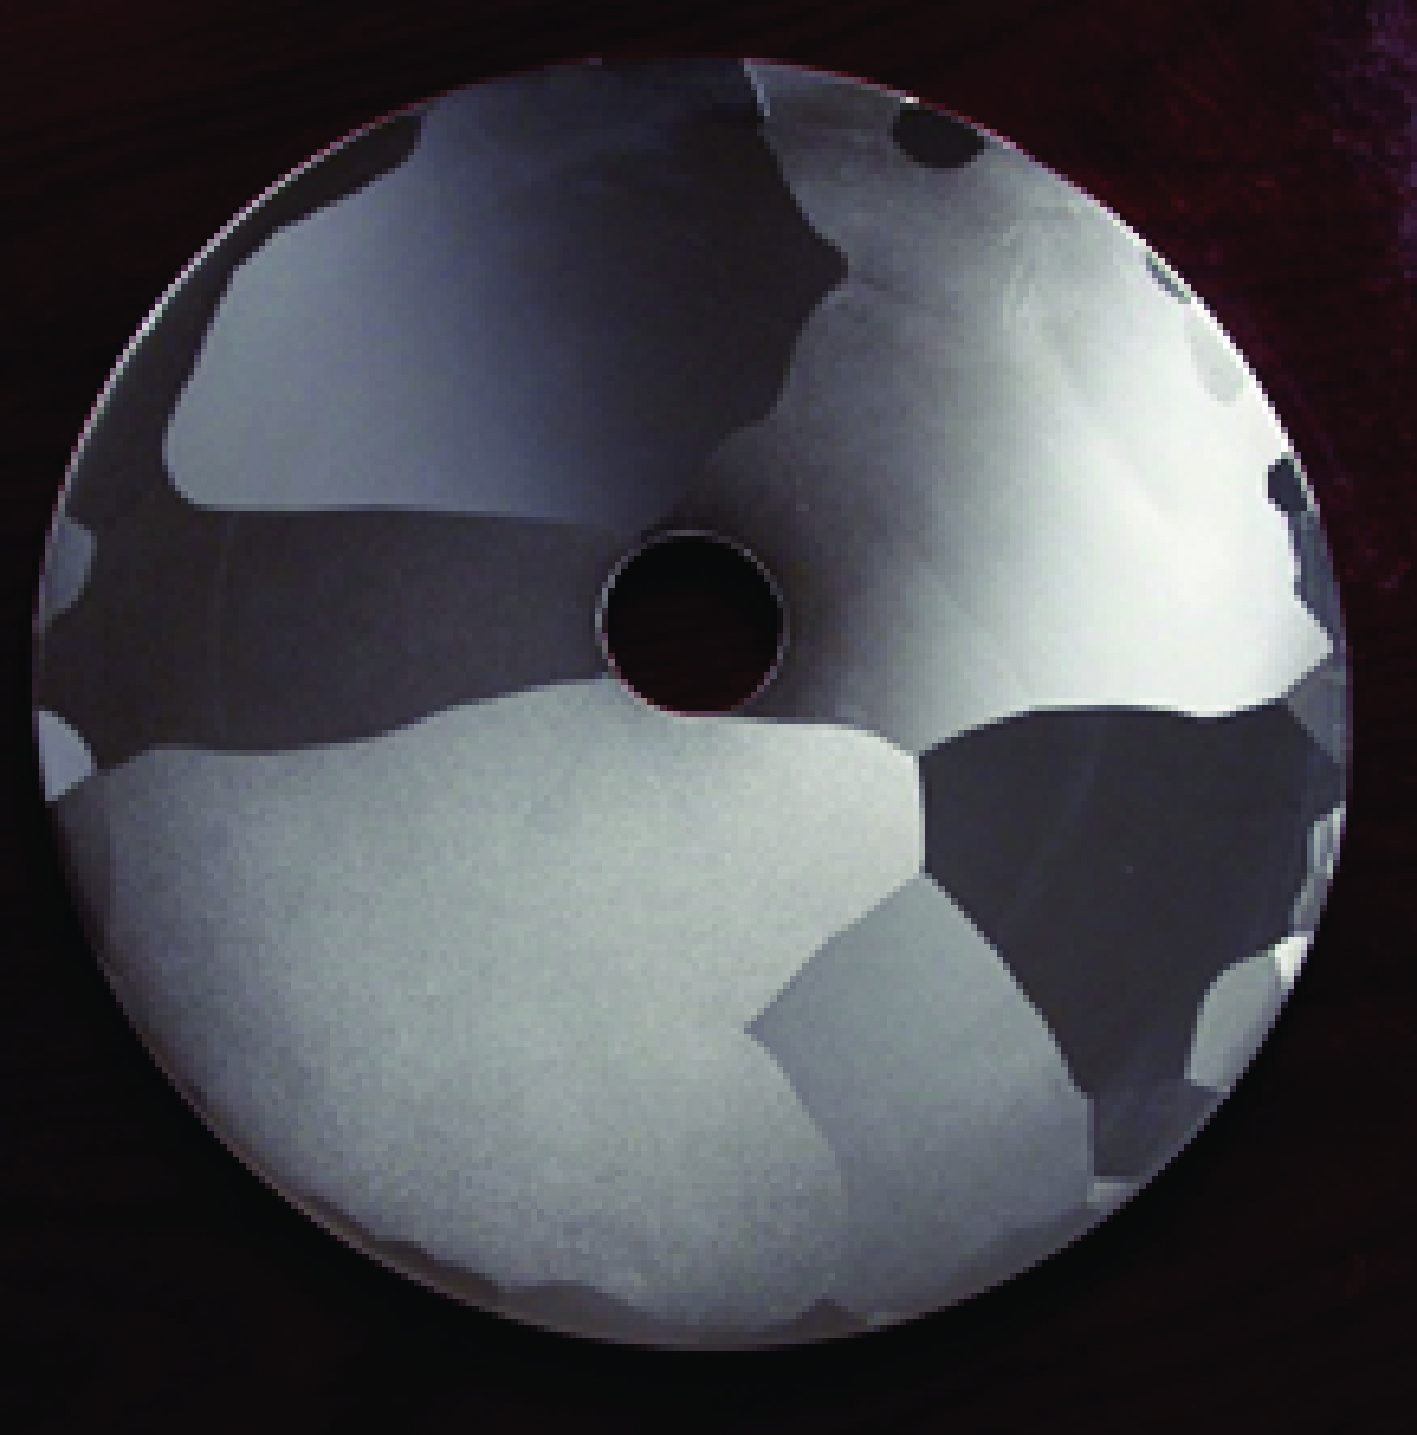 Large grain niobium material produced by Ningxia OTIC